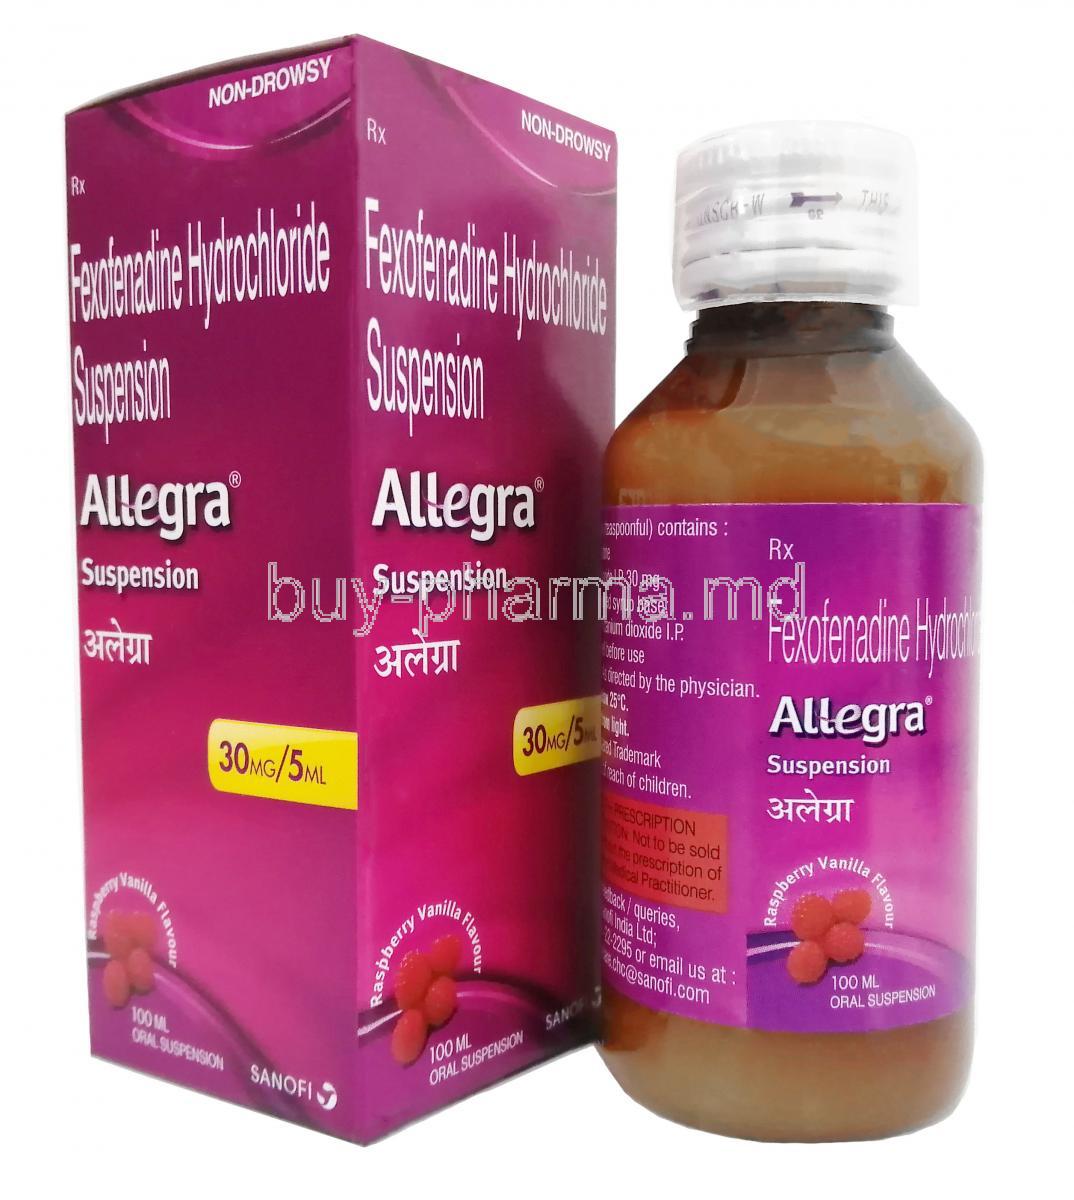 Allegra Suspension, Fexofenadine 30mg/5mL, Suspension 100mL, Box, Bottle